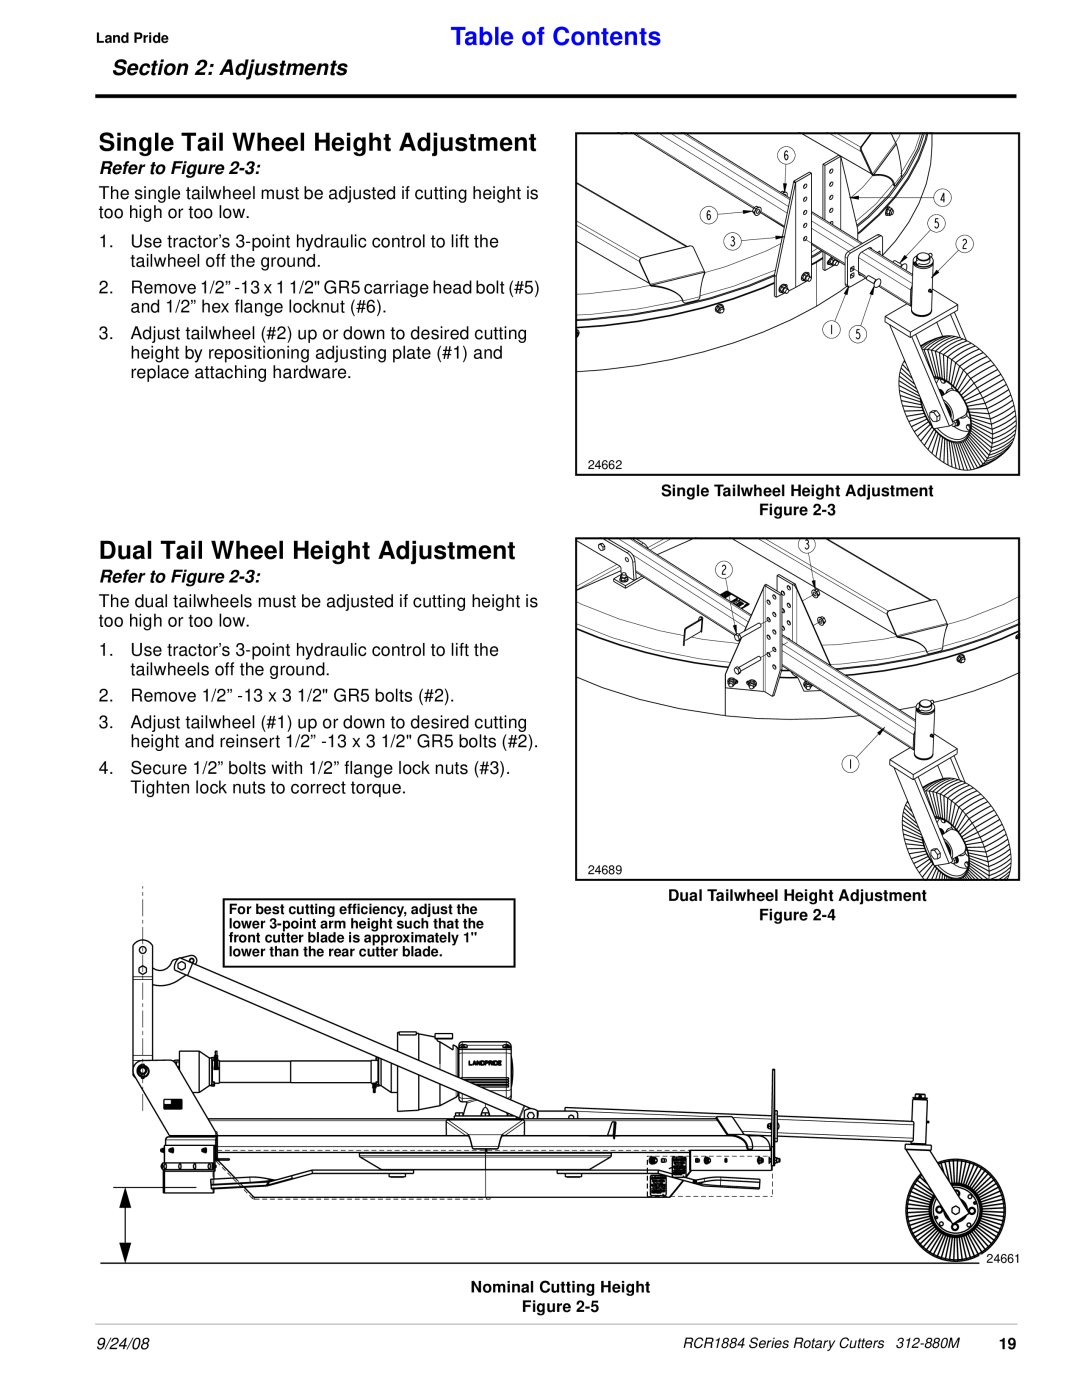 Land Pride RCR1884 Single Tail Wheel Height Adjustment, Dual Tail Wheel Height Adjustment, Table of Contents, Adjustments 